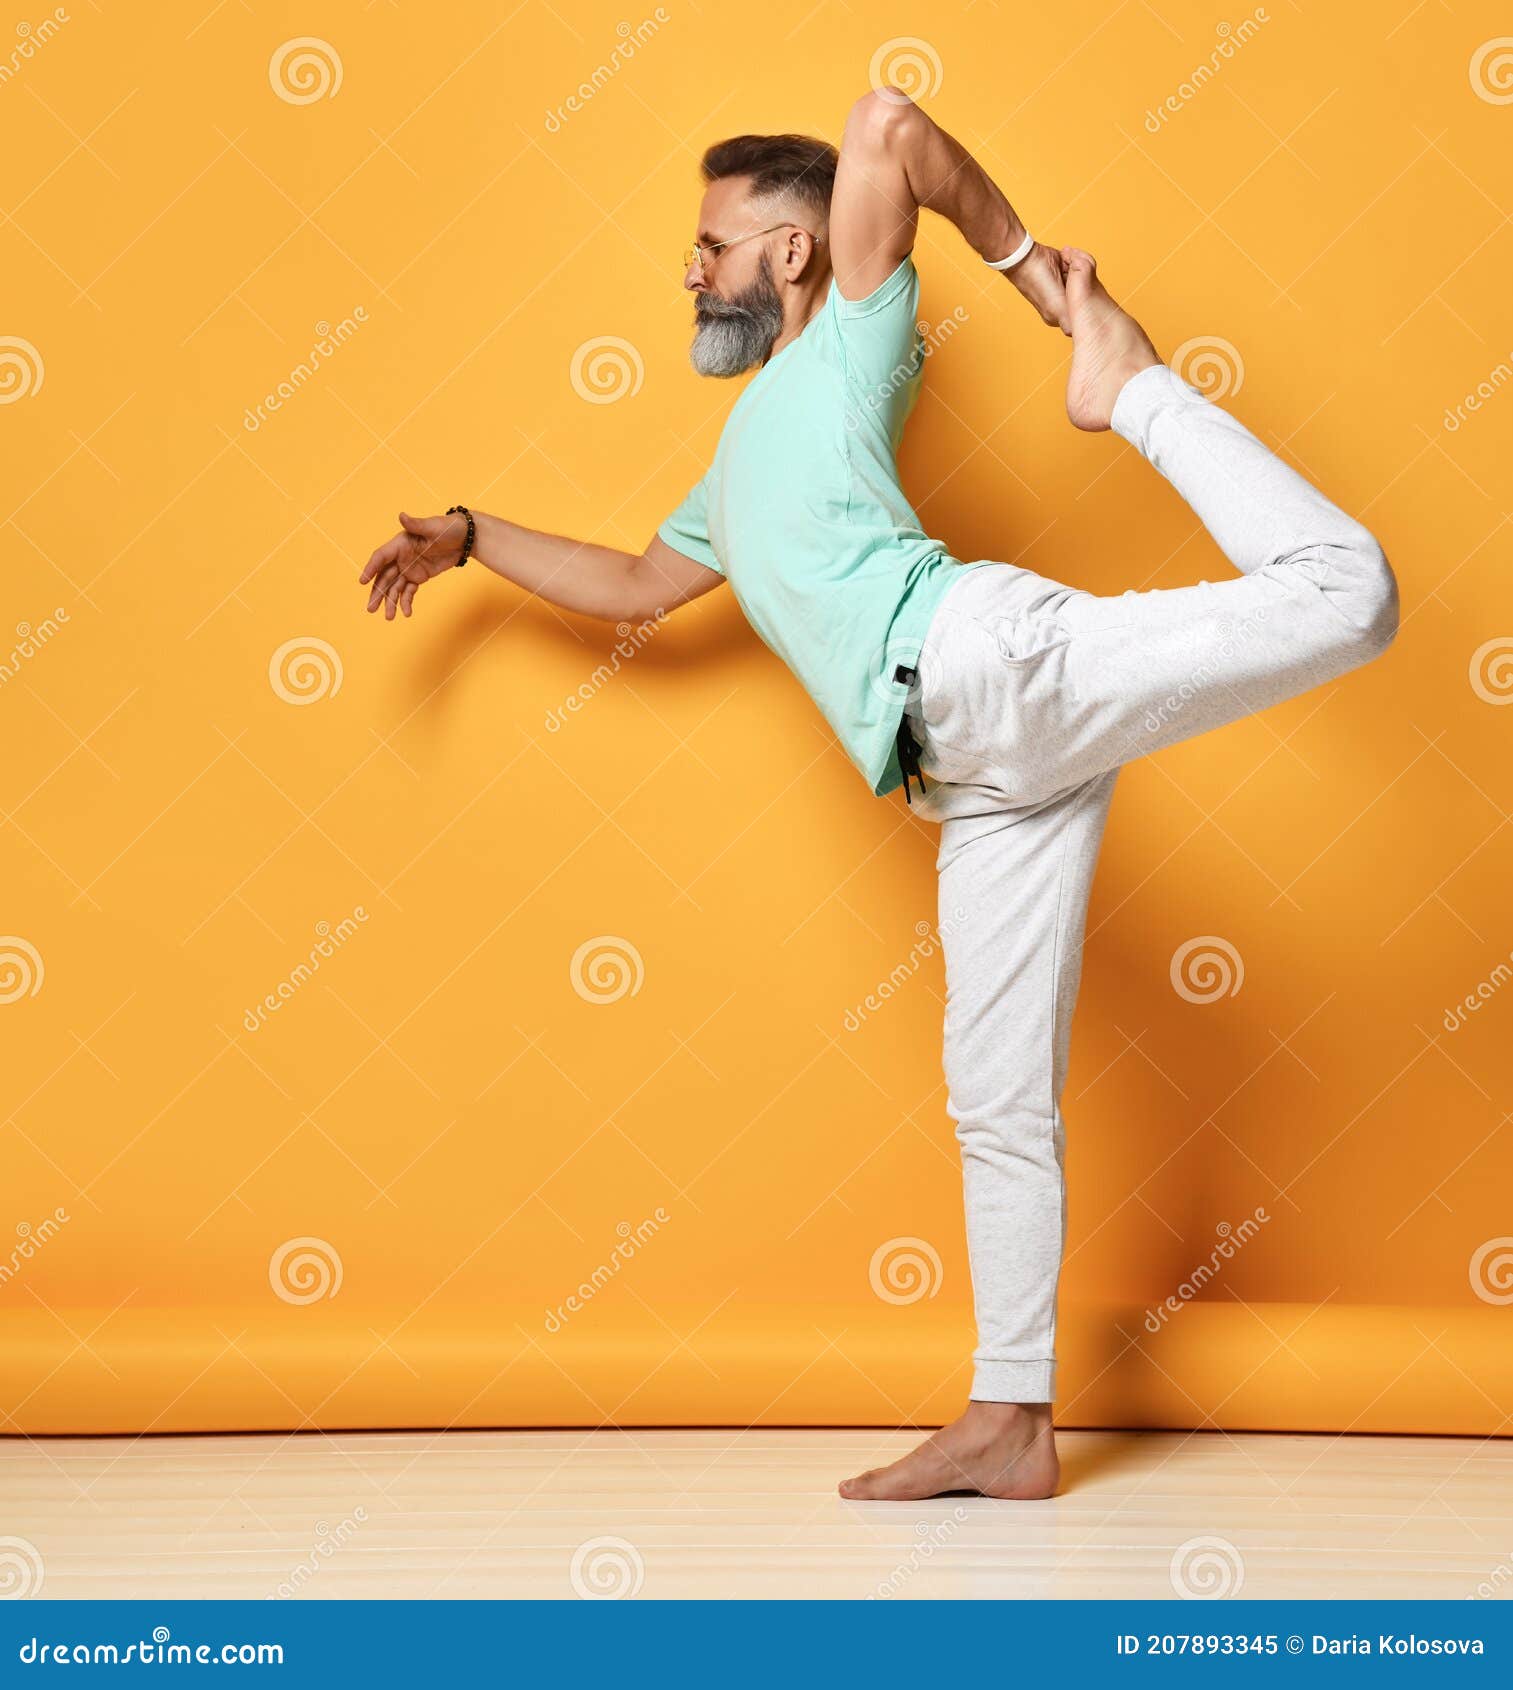 The Raised Feet Pose in Yin Yoga